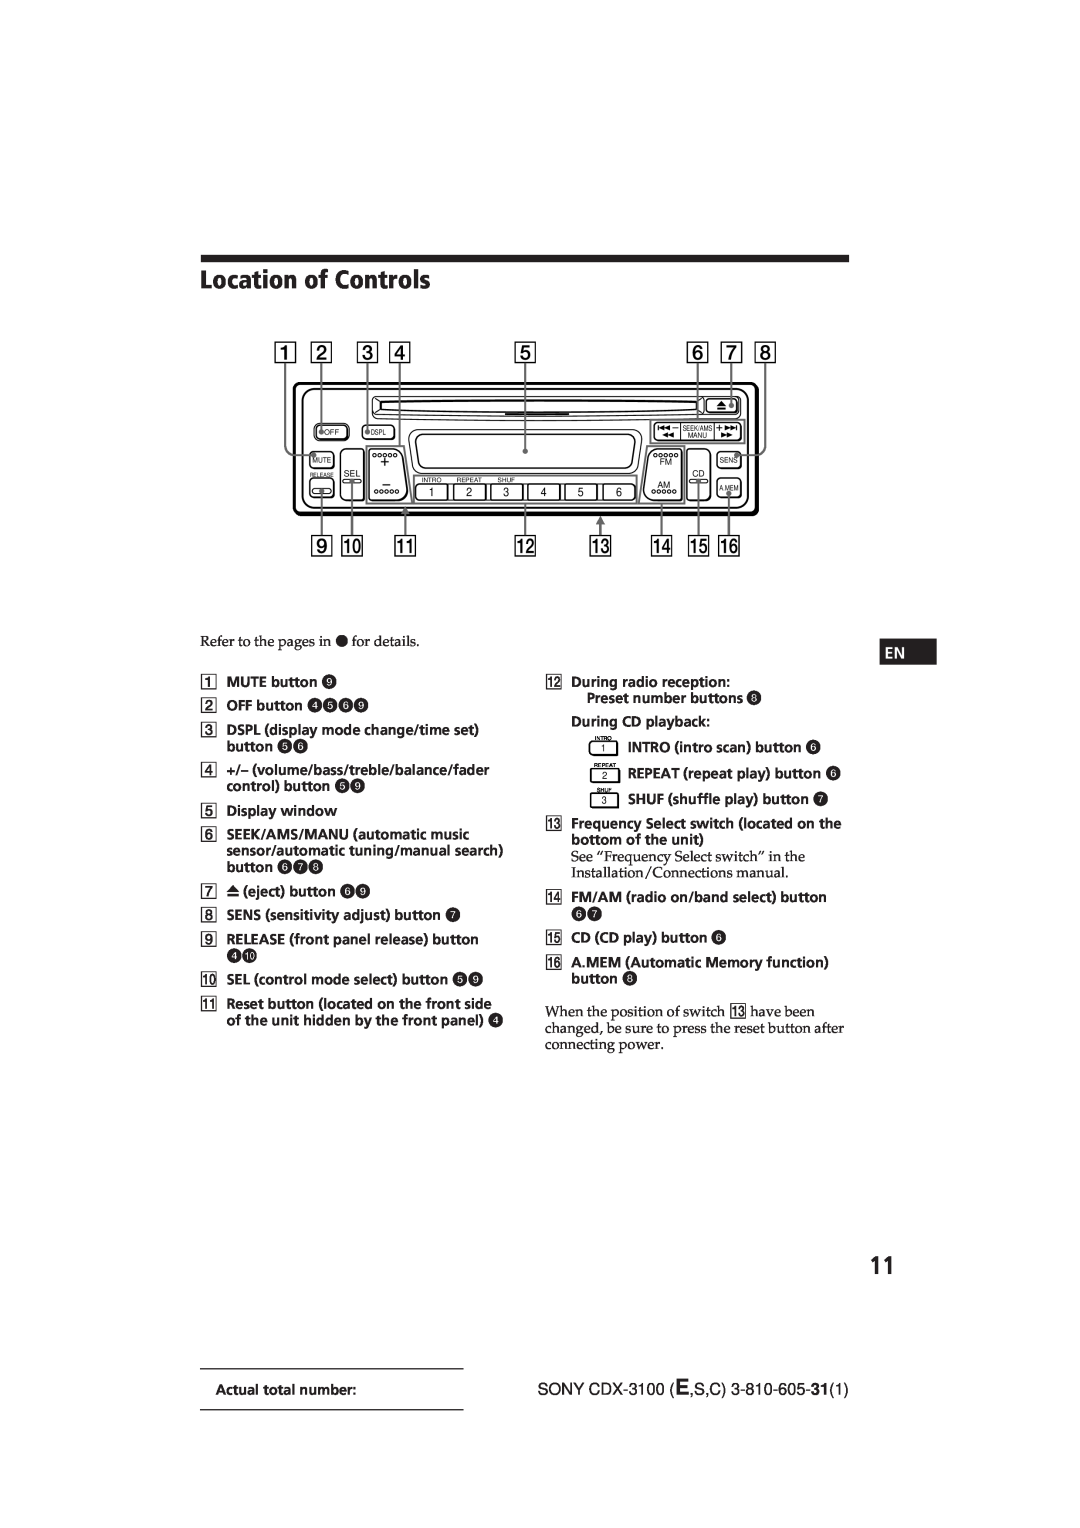 Sony Model CDX-3100 manual Location of Controls 